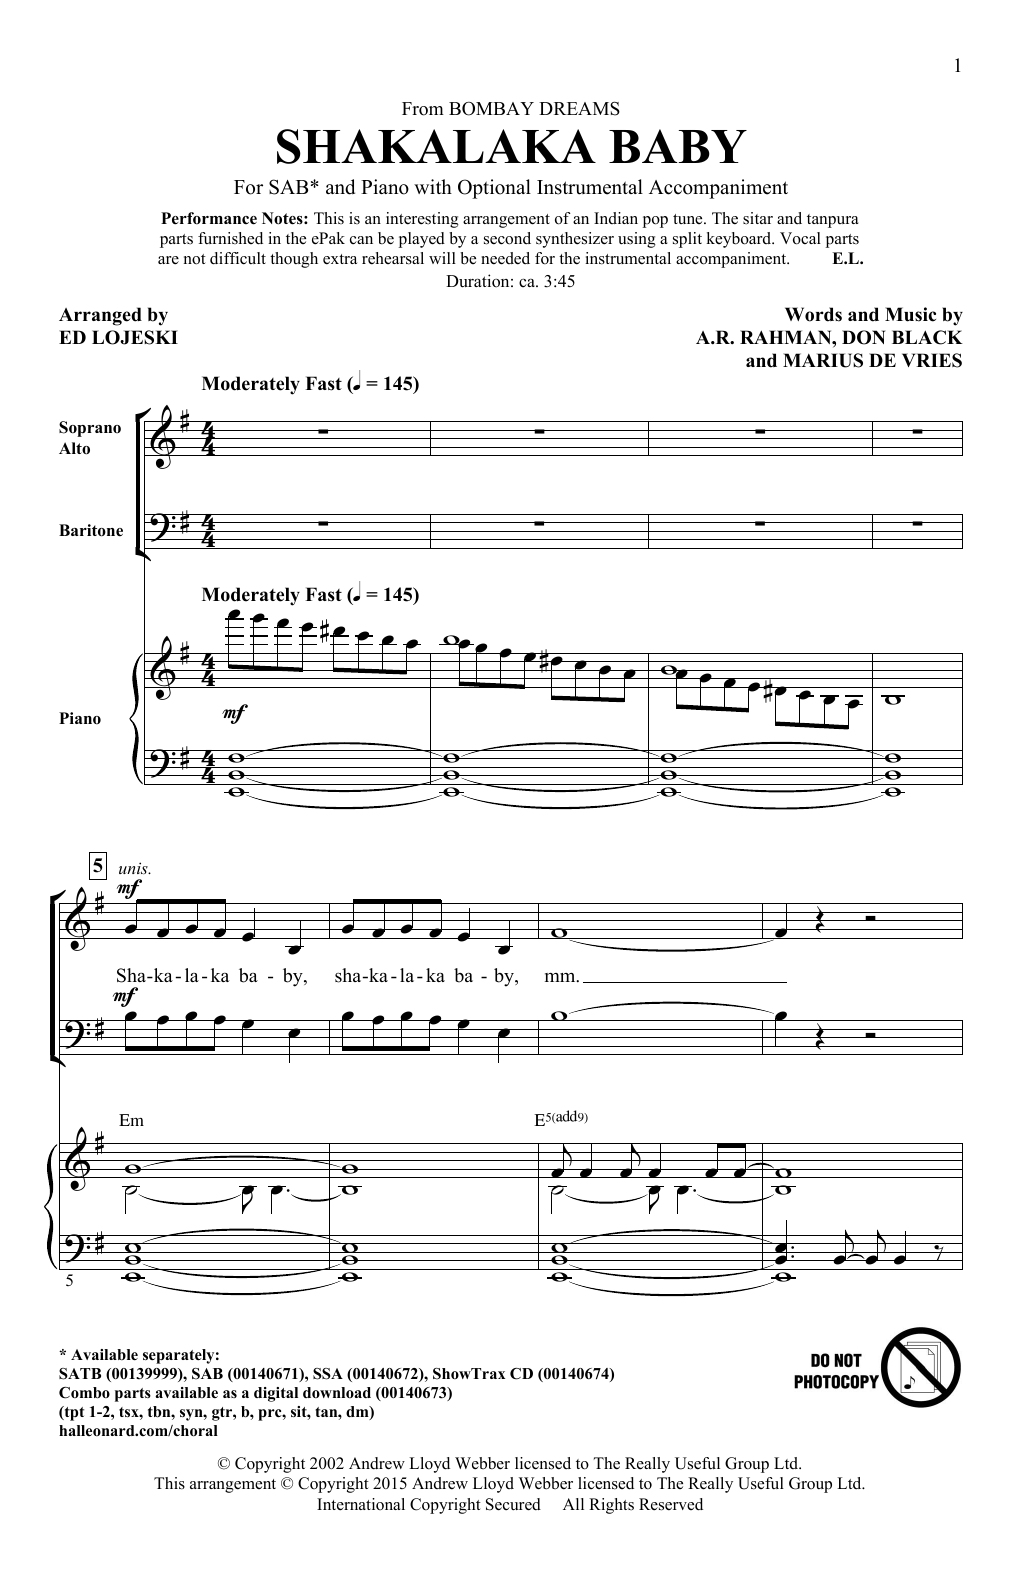 Ed Lojeski Shakalaka Baby (from Bombay Dreams) sheet music notes and chords arranged for SATB Choir